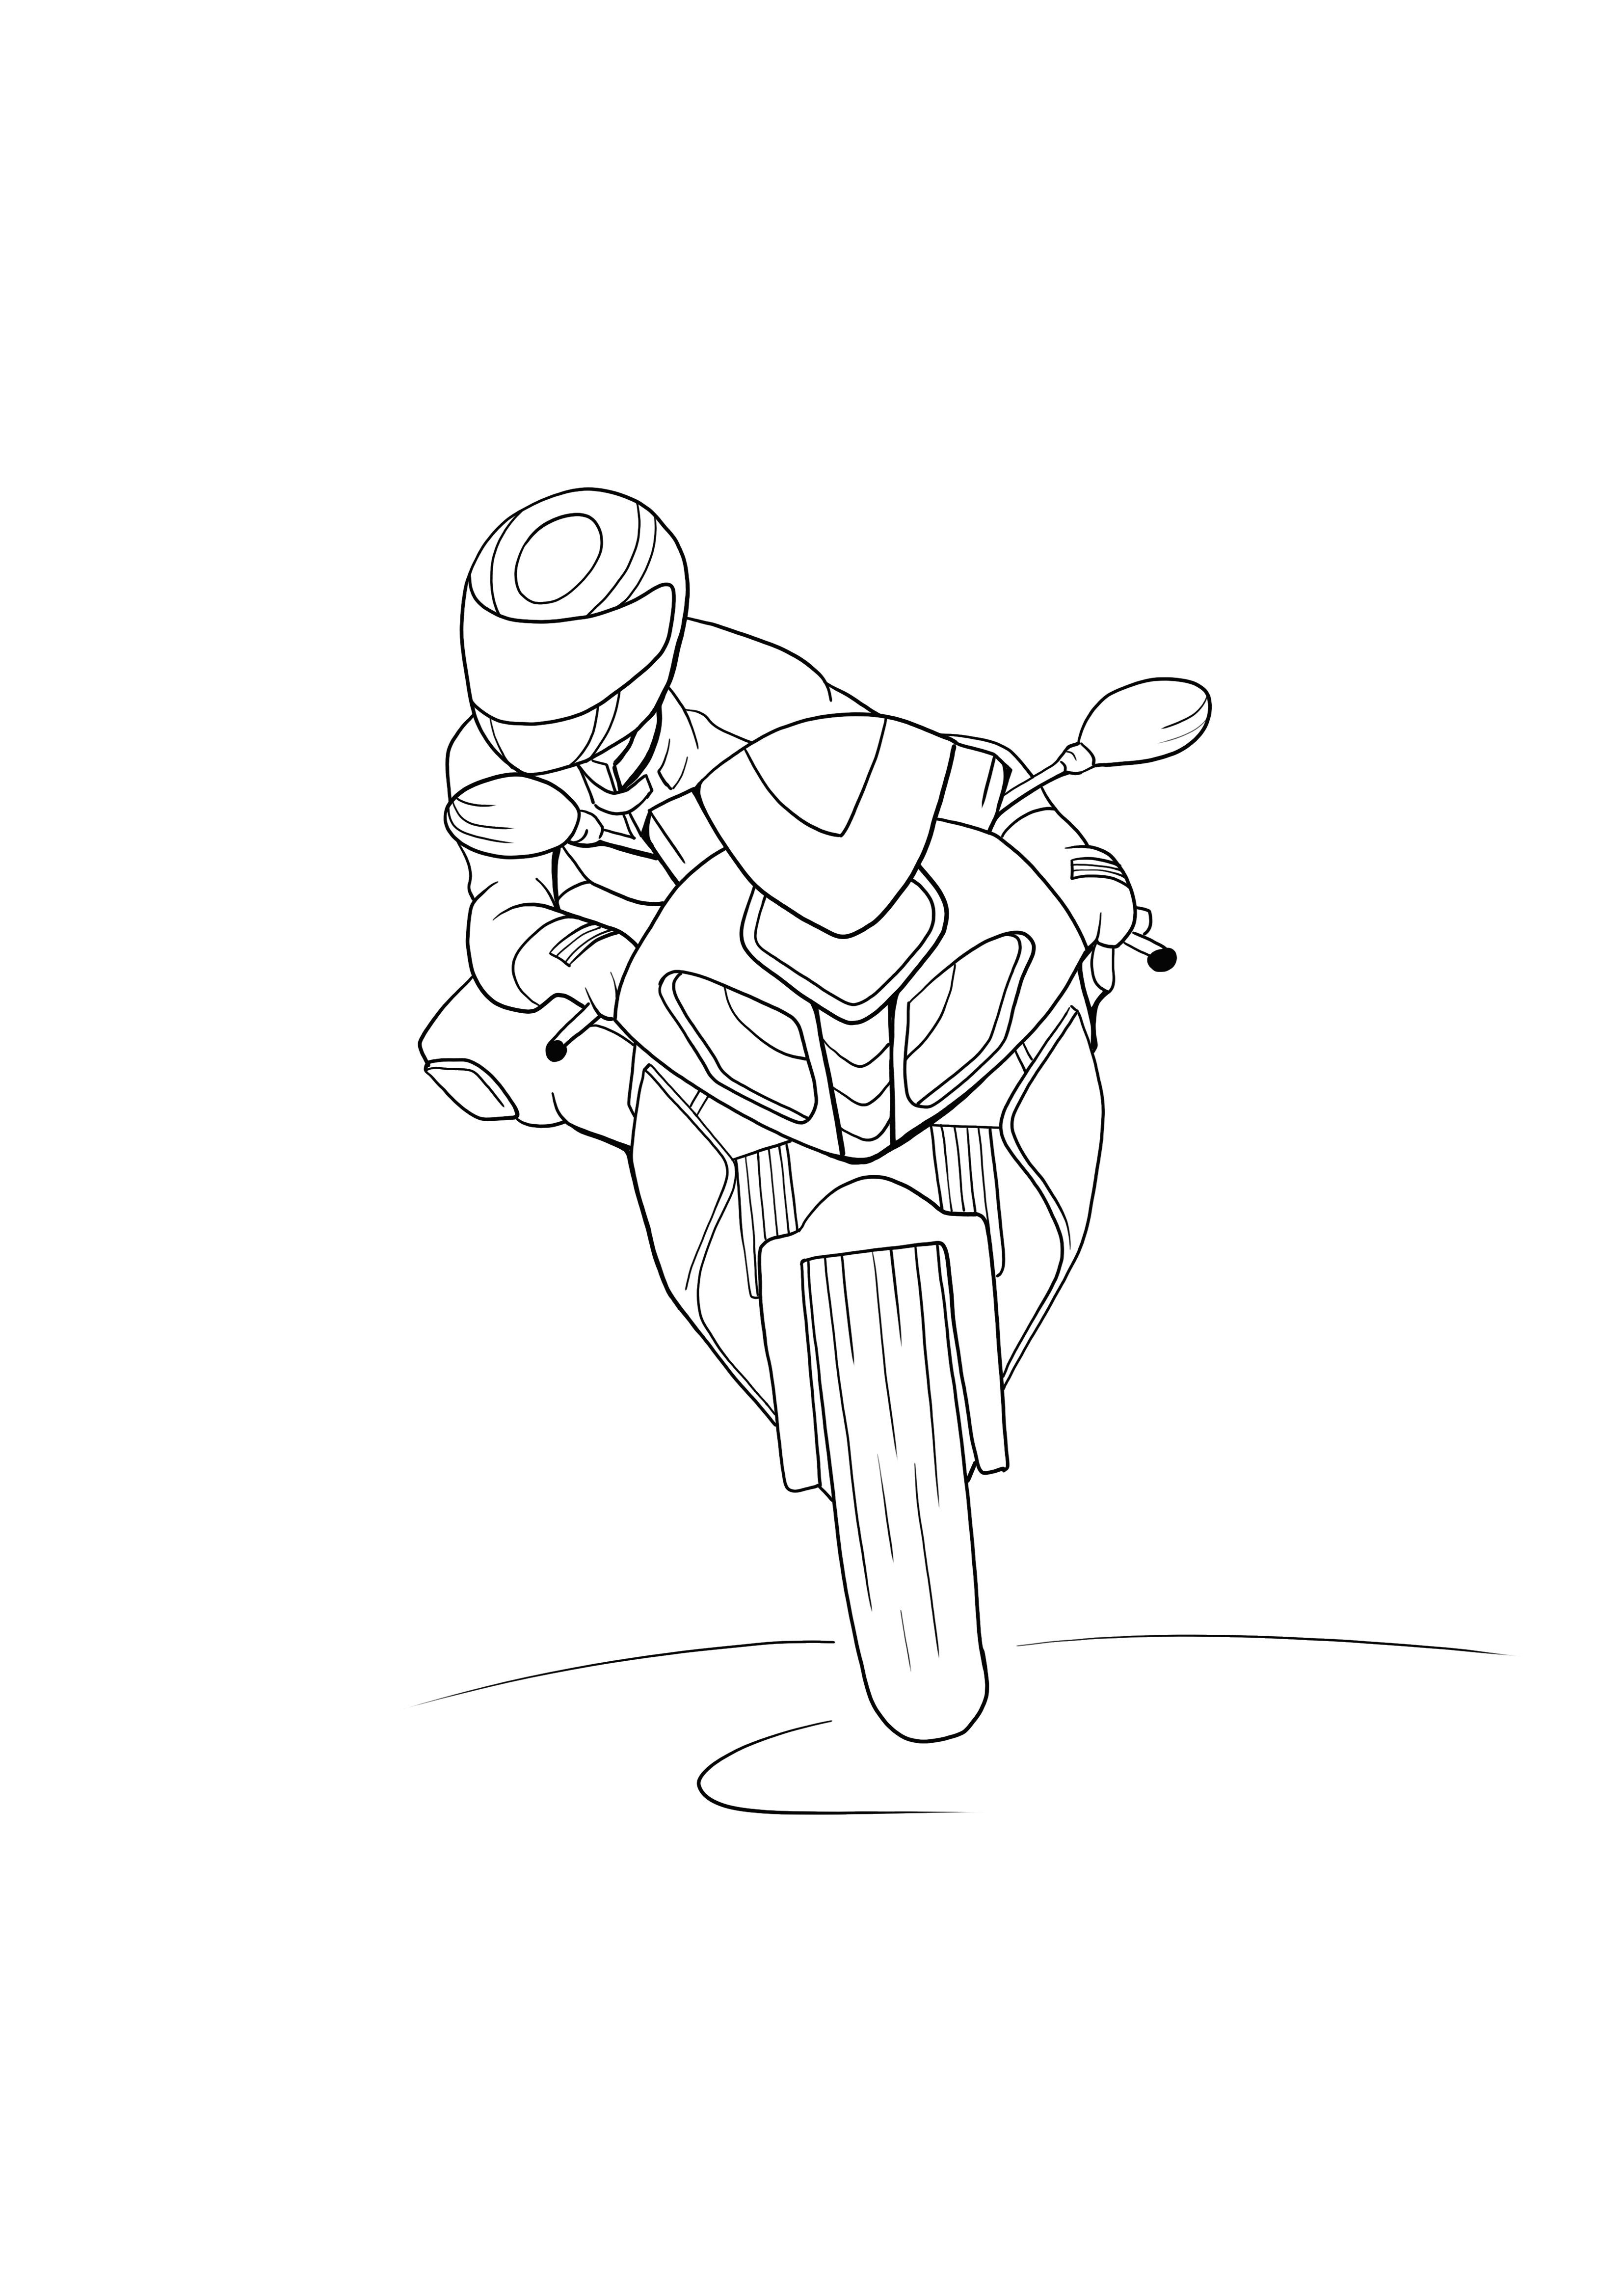 Desenho da corrida de moto